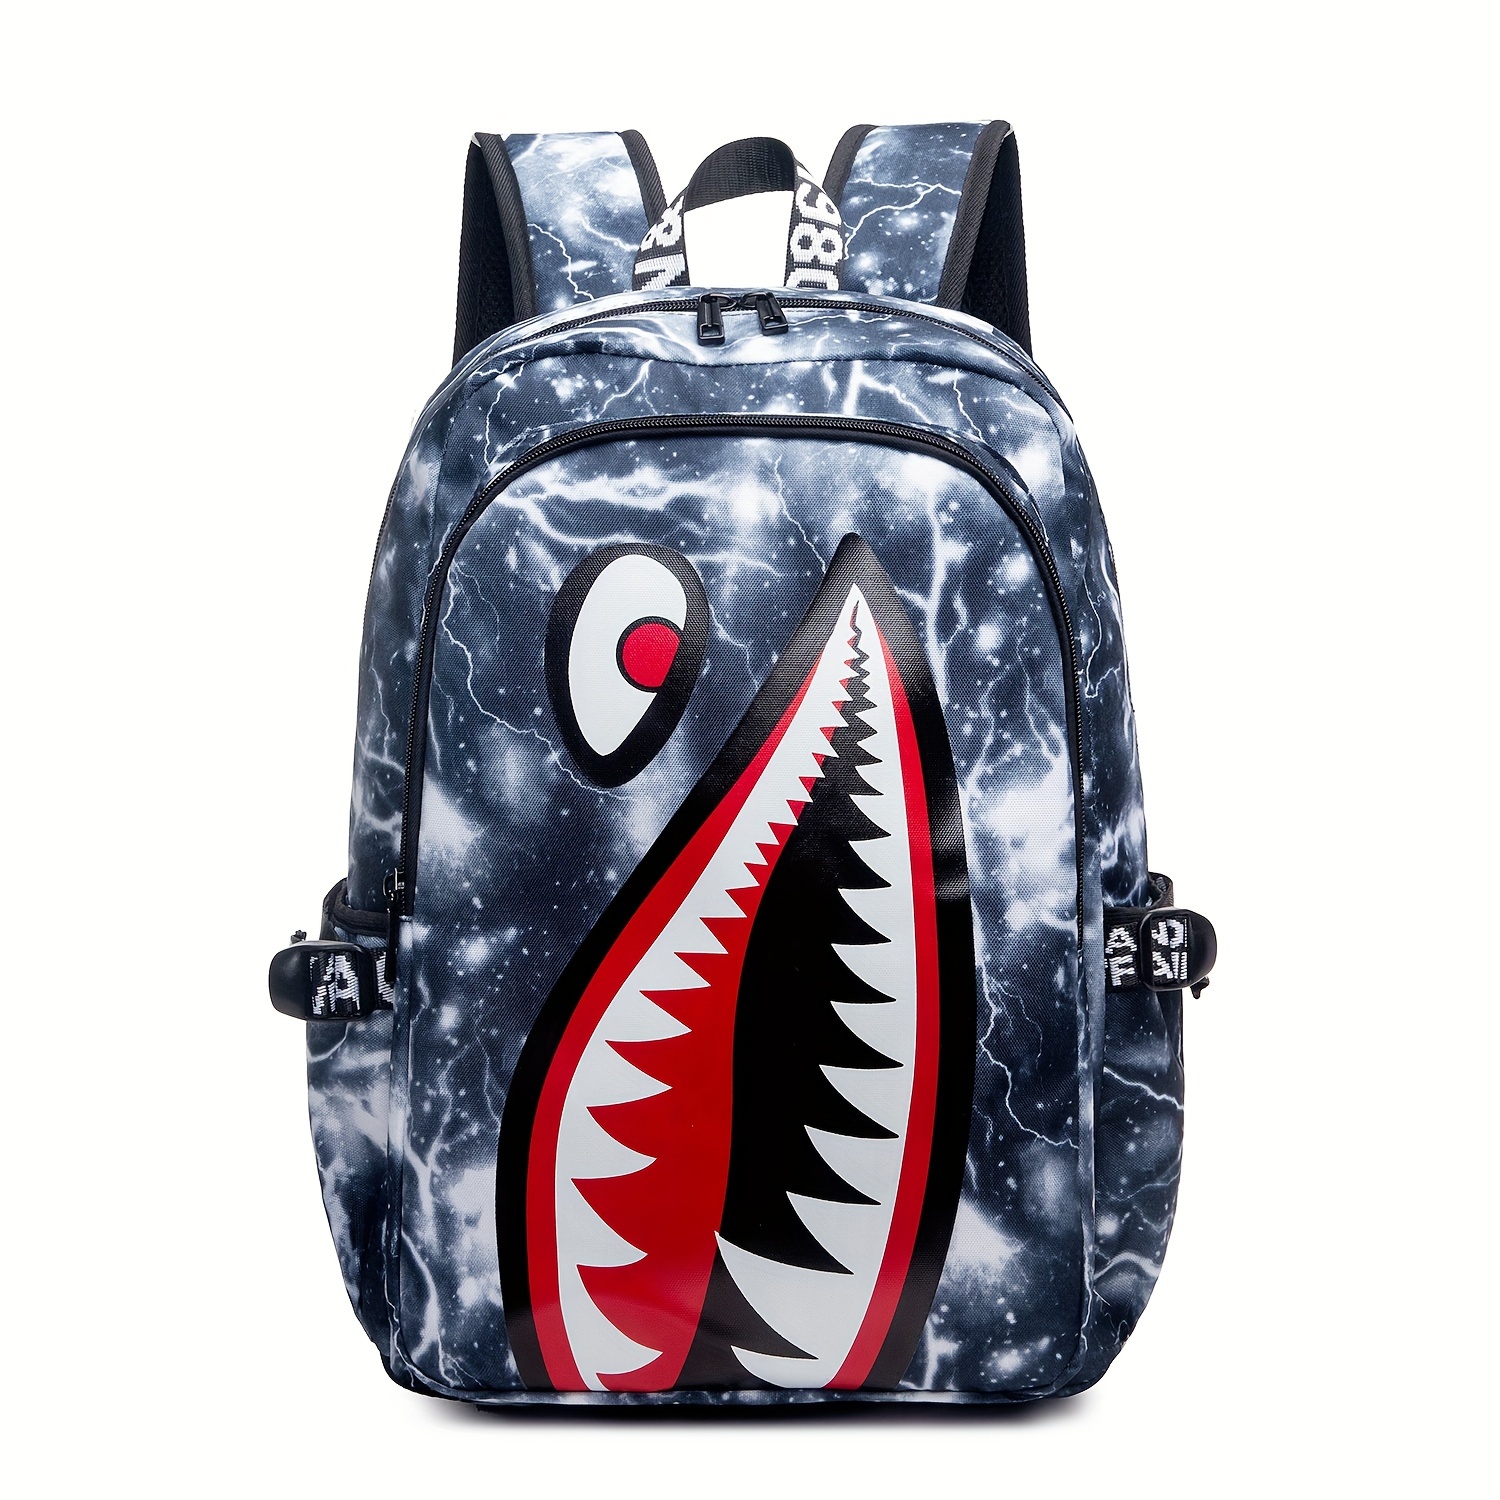 

Cool Anime Shark Teen Backpack - Lightweight, Waterproof Nylon School Bag With Adjustable Straps For Boys & Girls